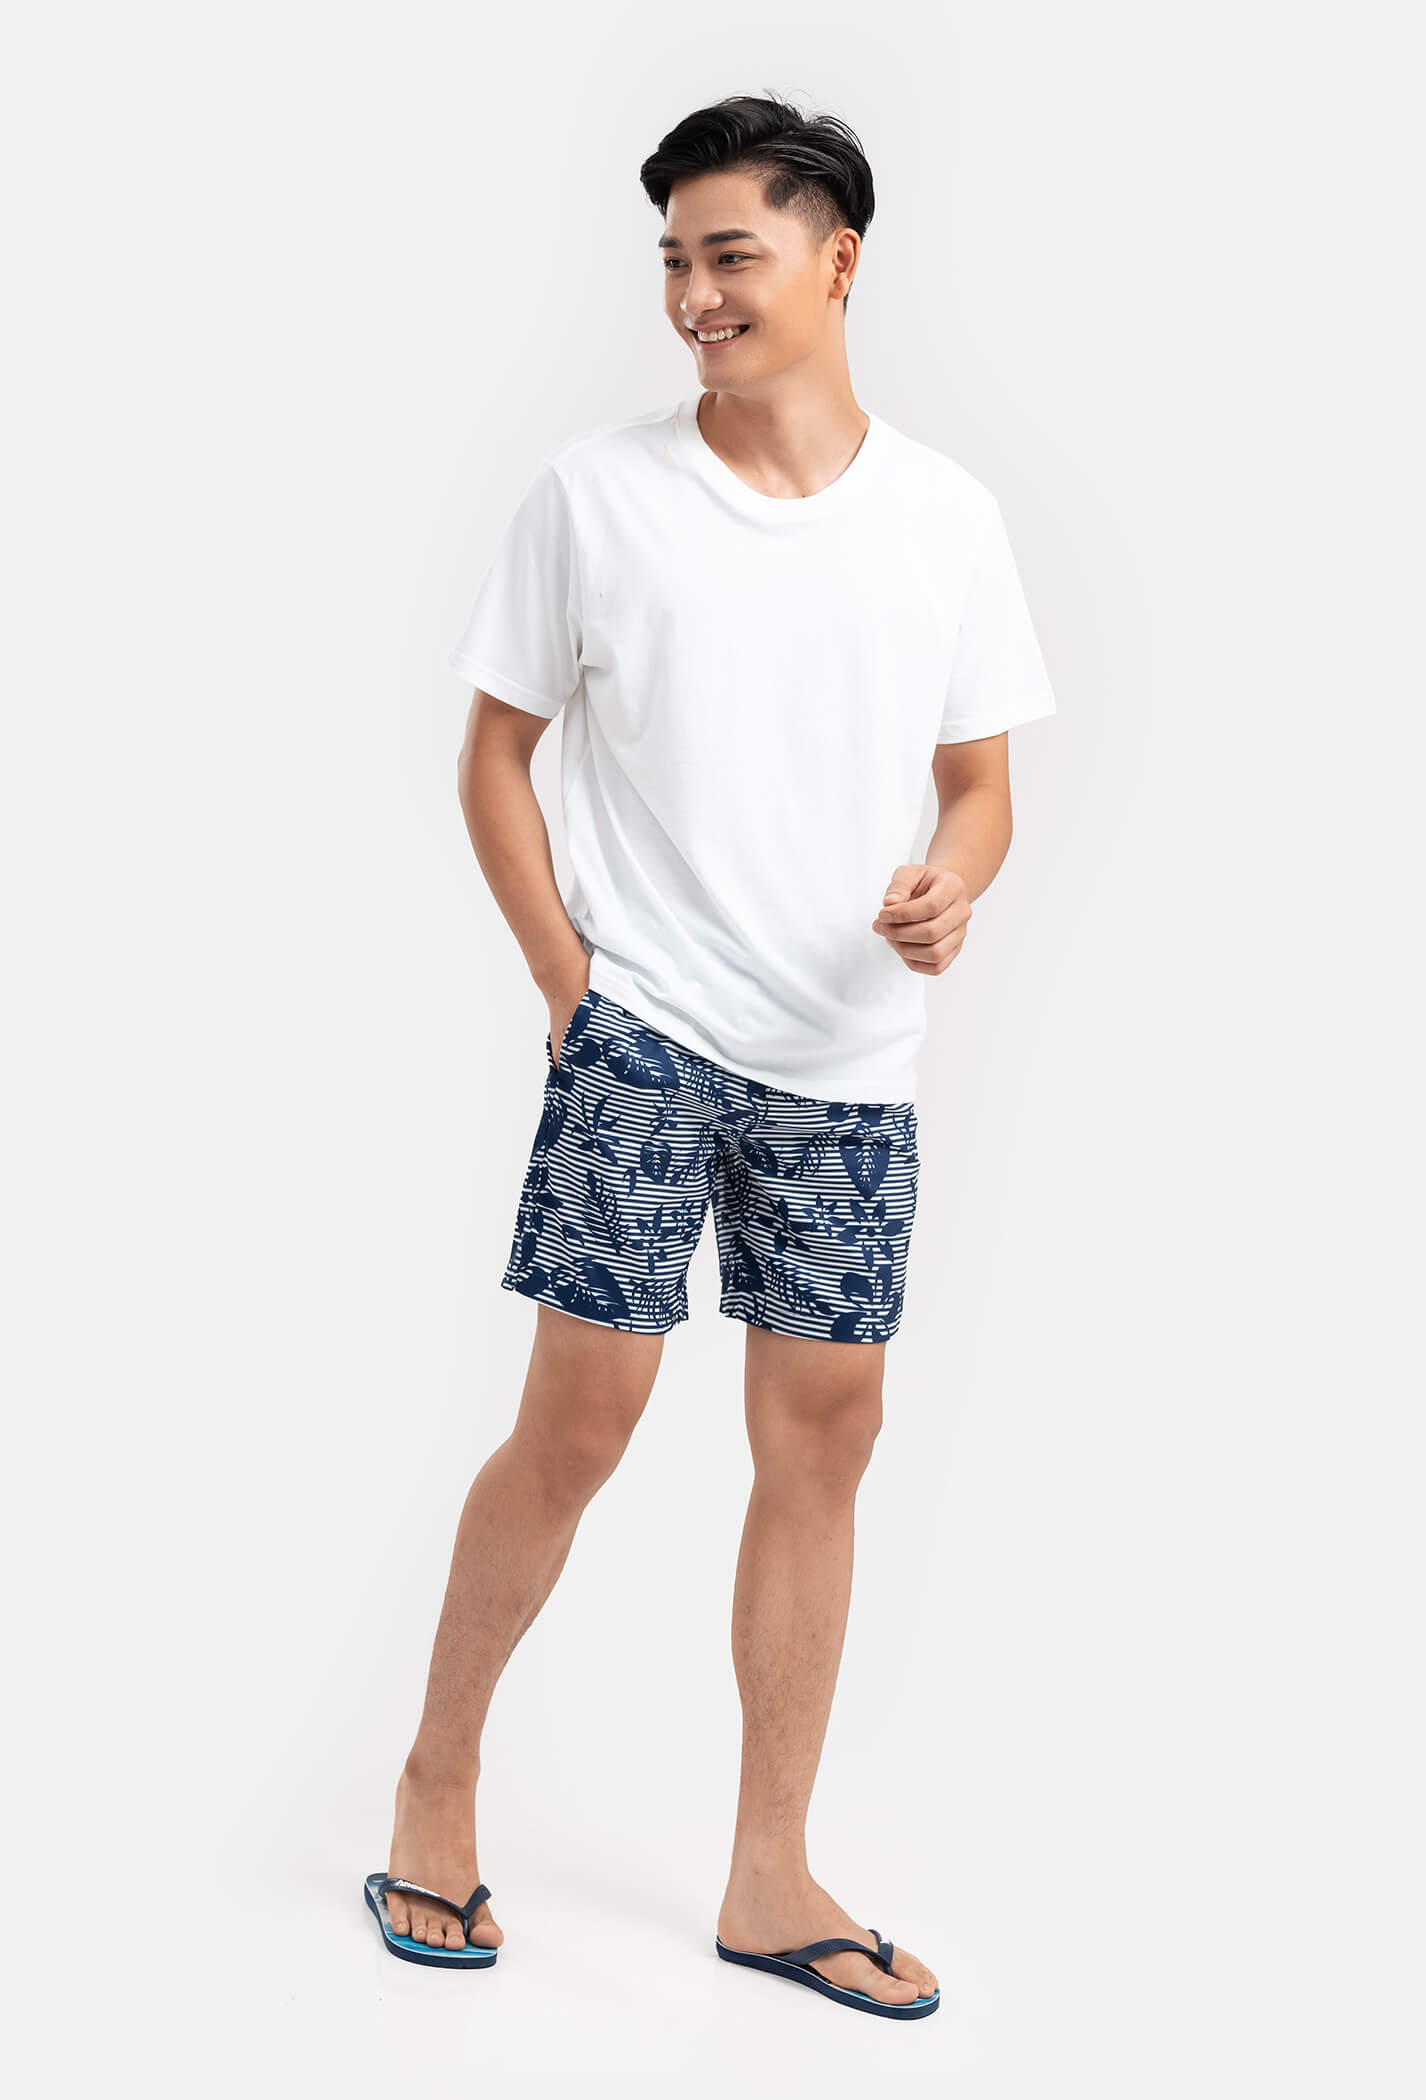 Deal - Quần shorts nam Classic Beach có túi khoá sau Xanh đậm 1